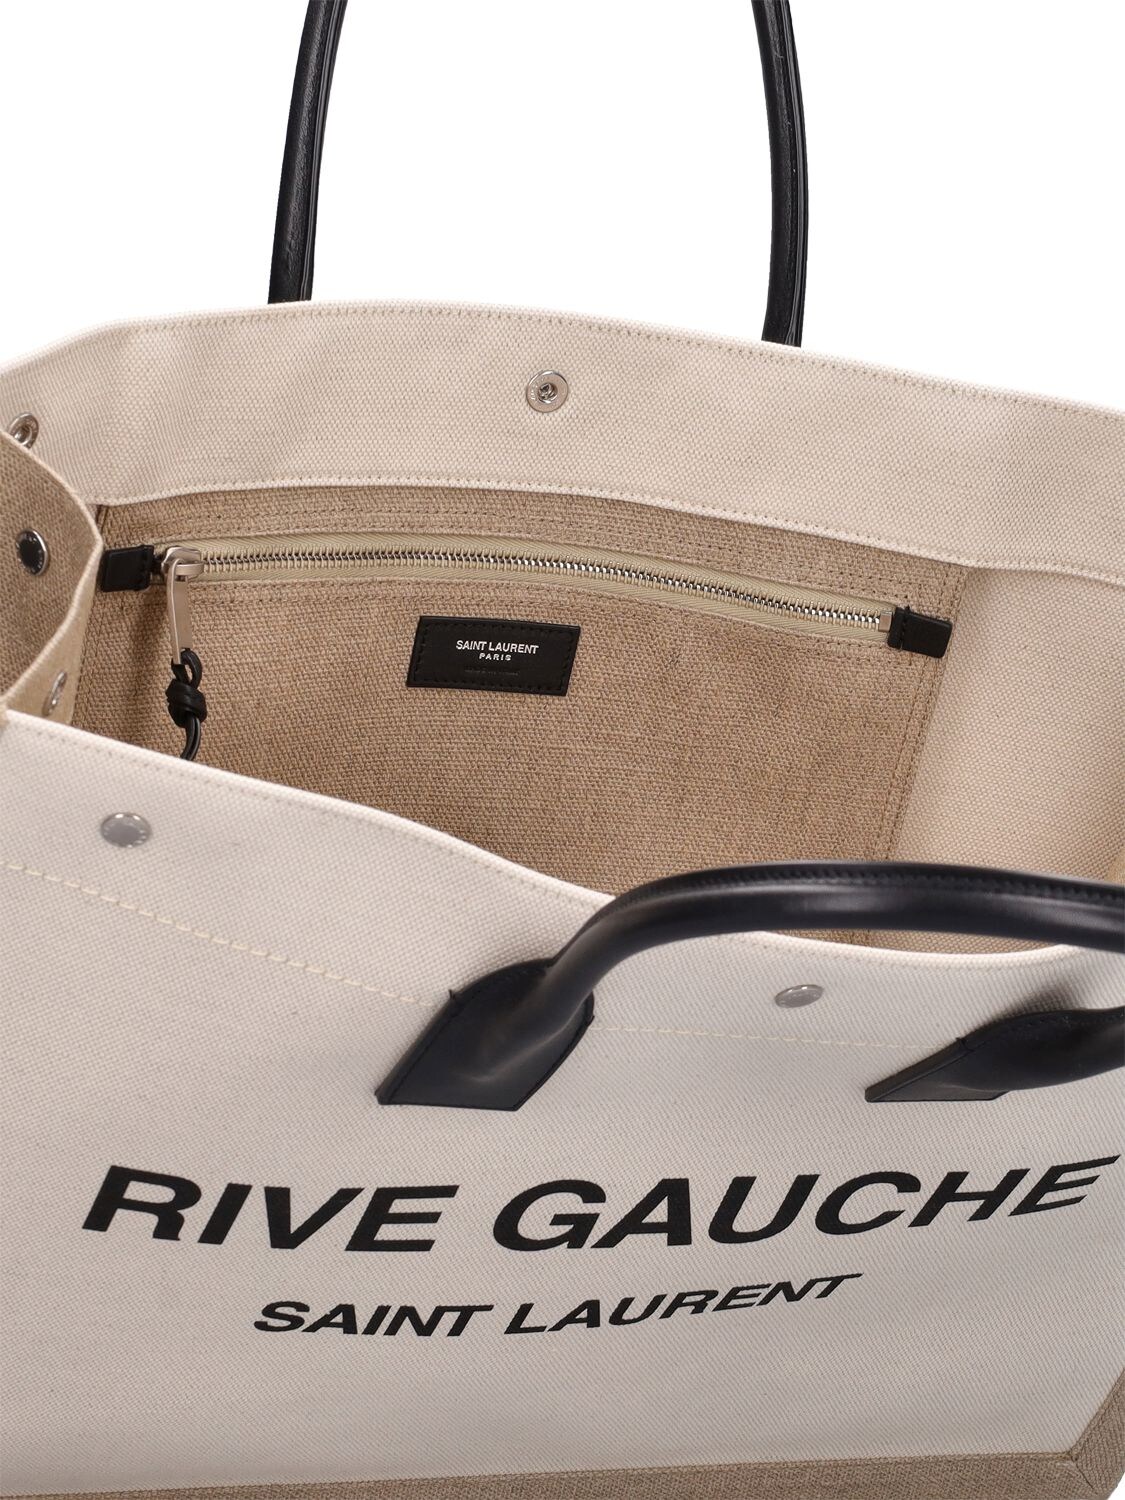 Saint Laurent Rive Gauche Tote Bag - BOPF